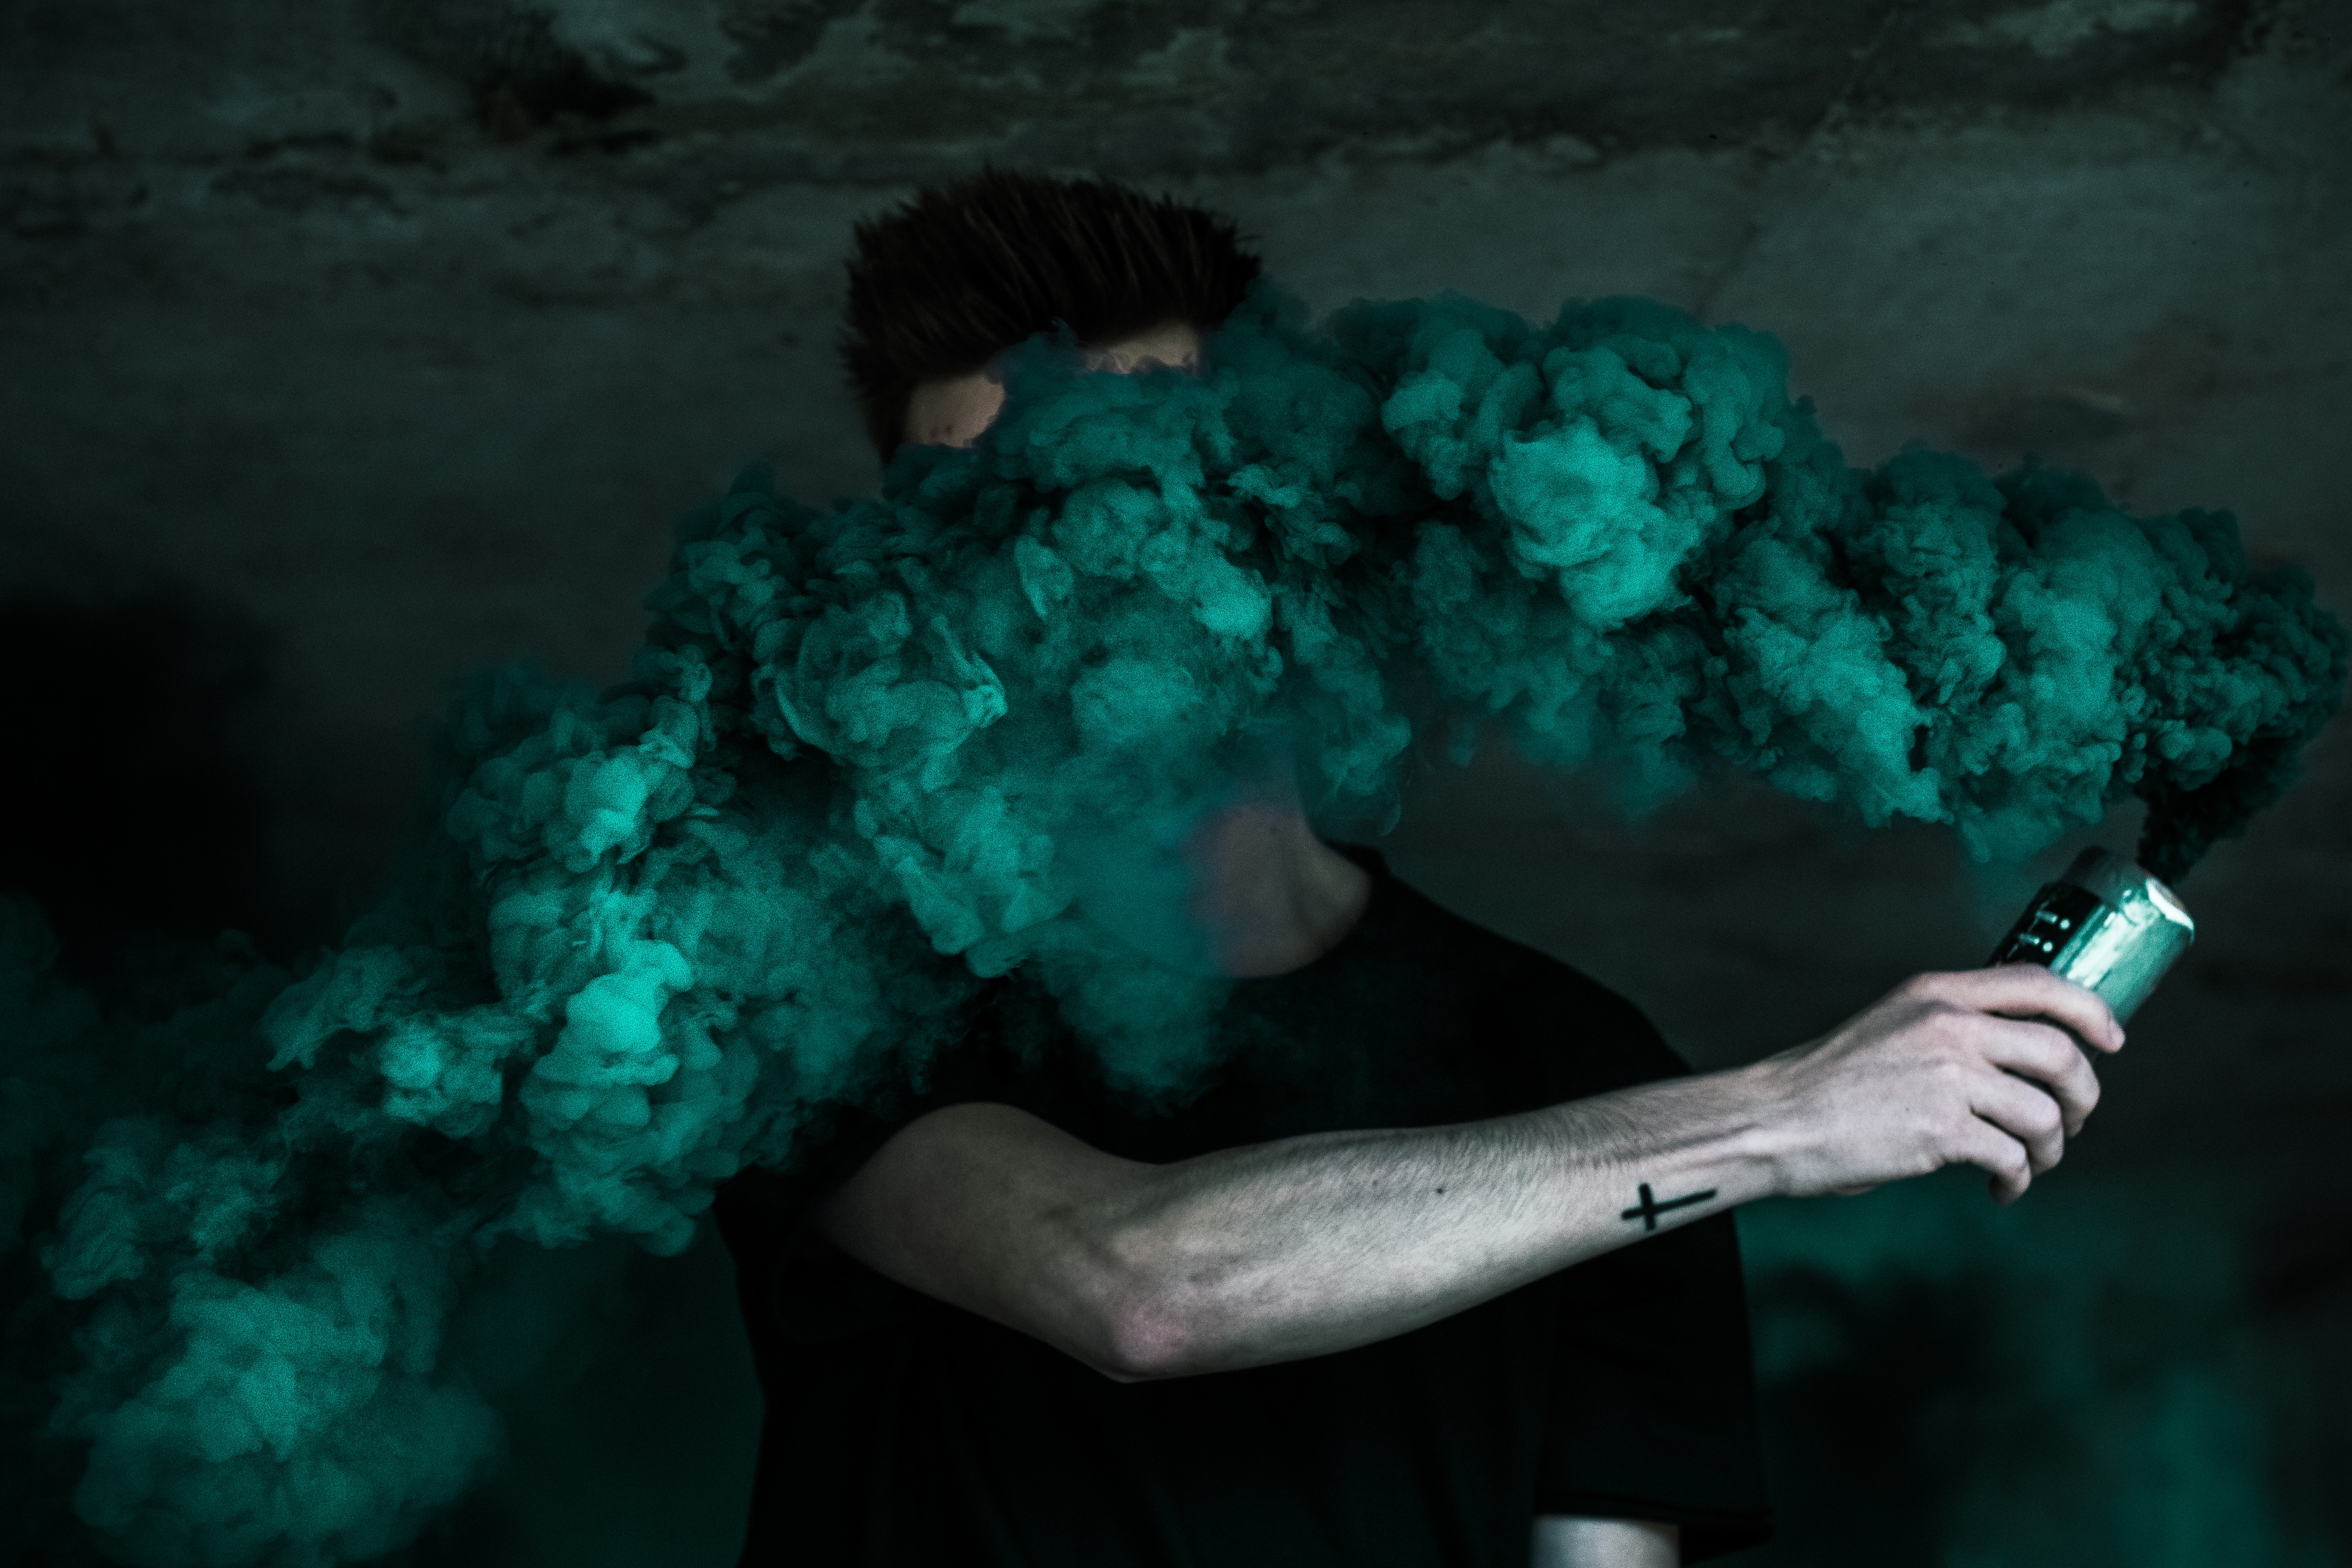 X tattoo hold smoke bomb holding green brazo creative mons images arm male smoke man guy